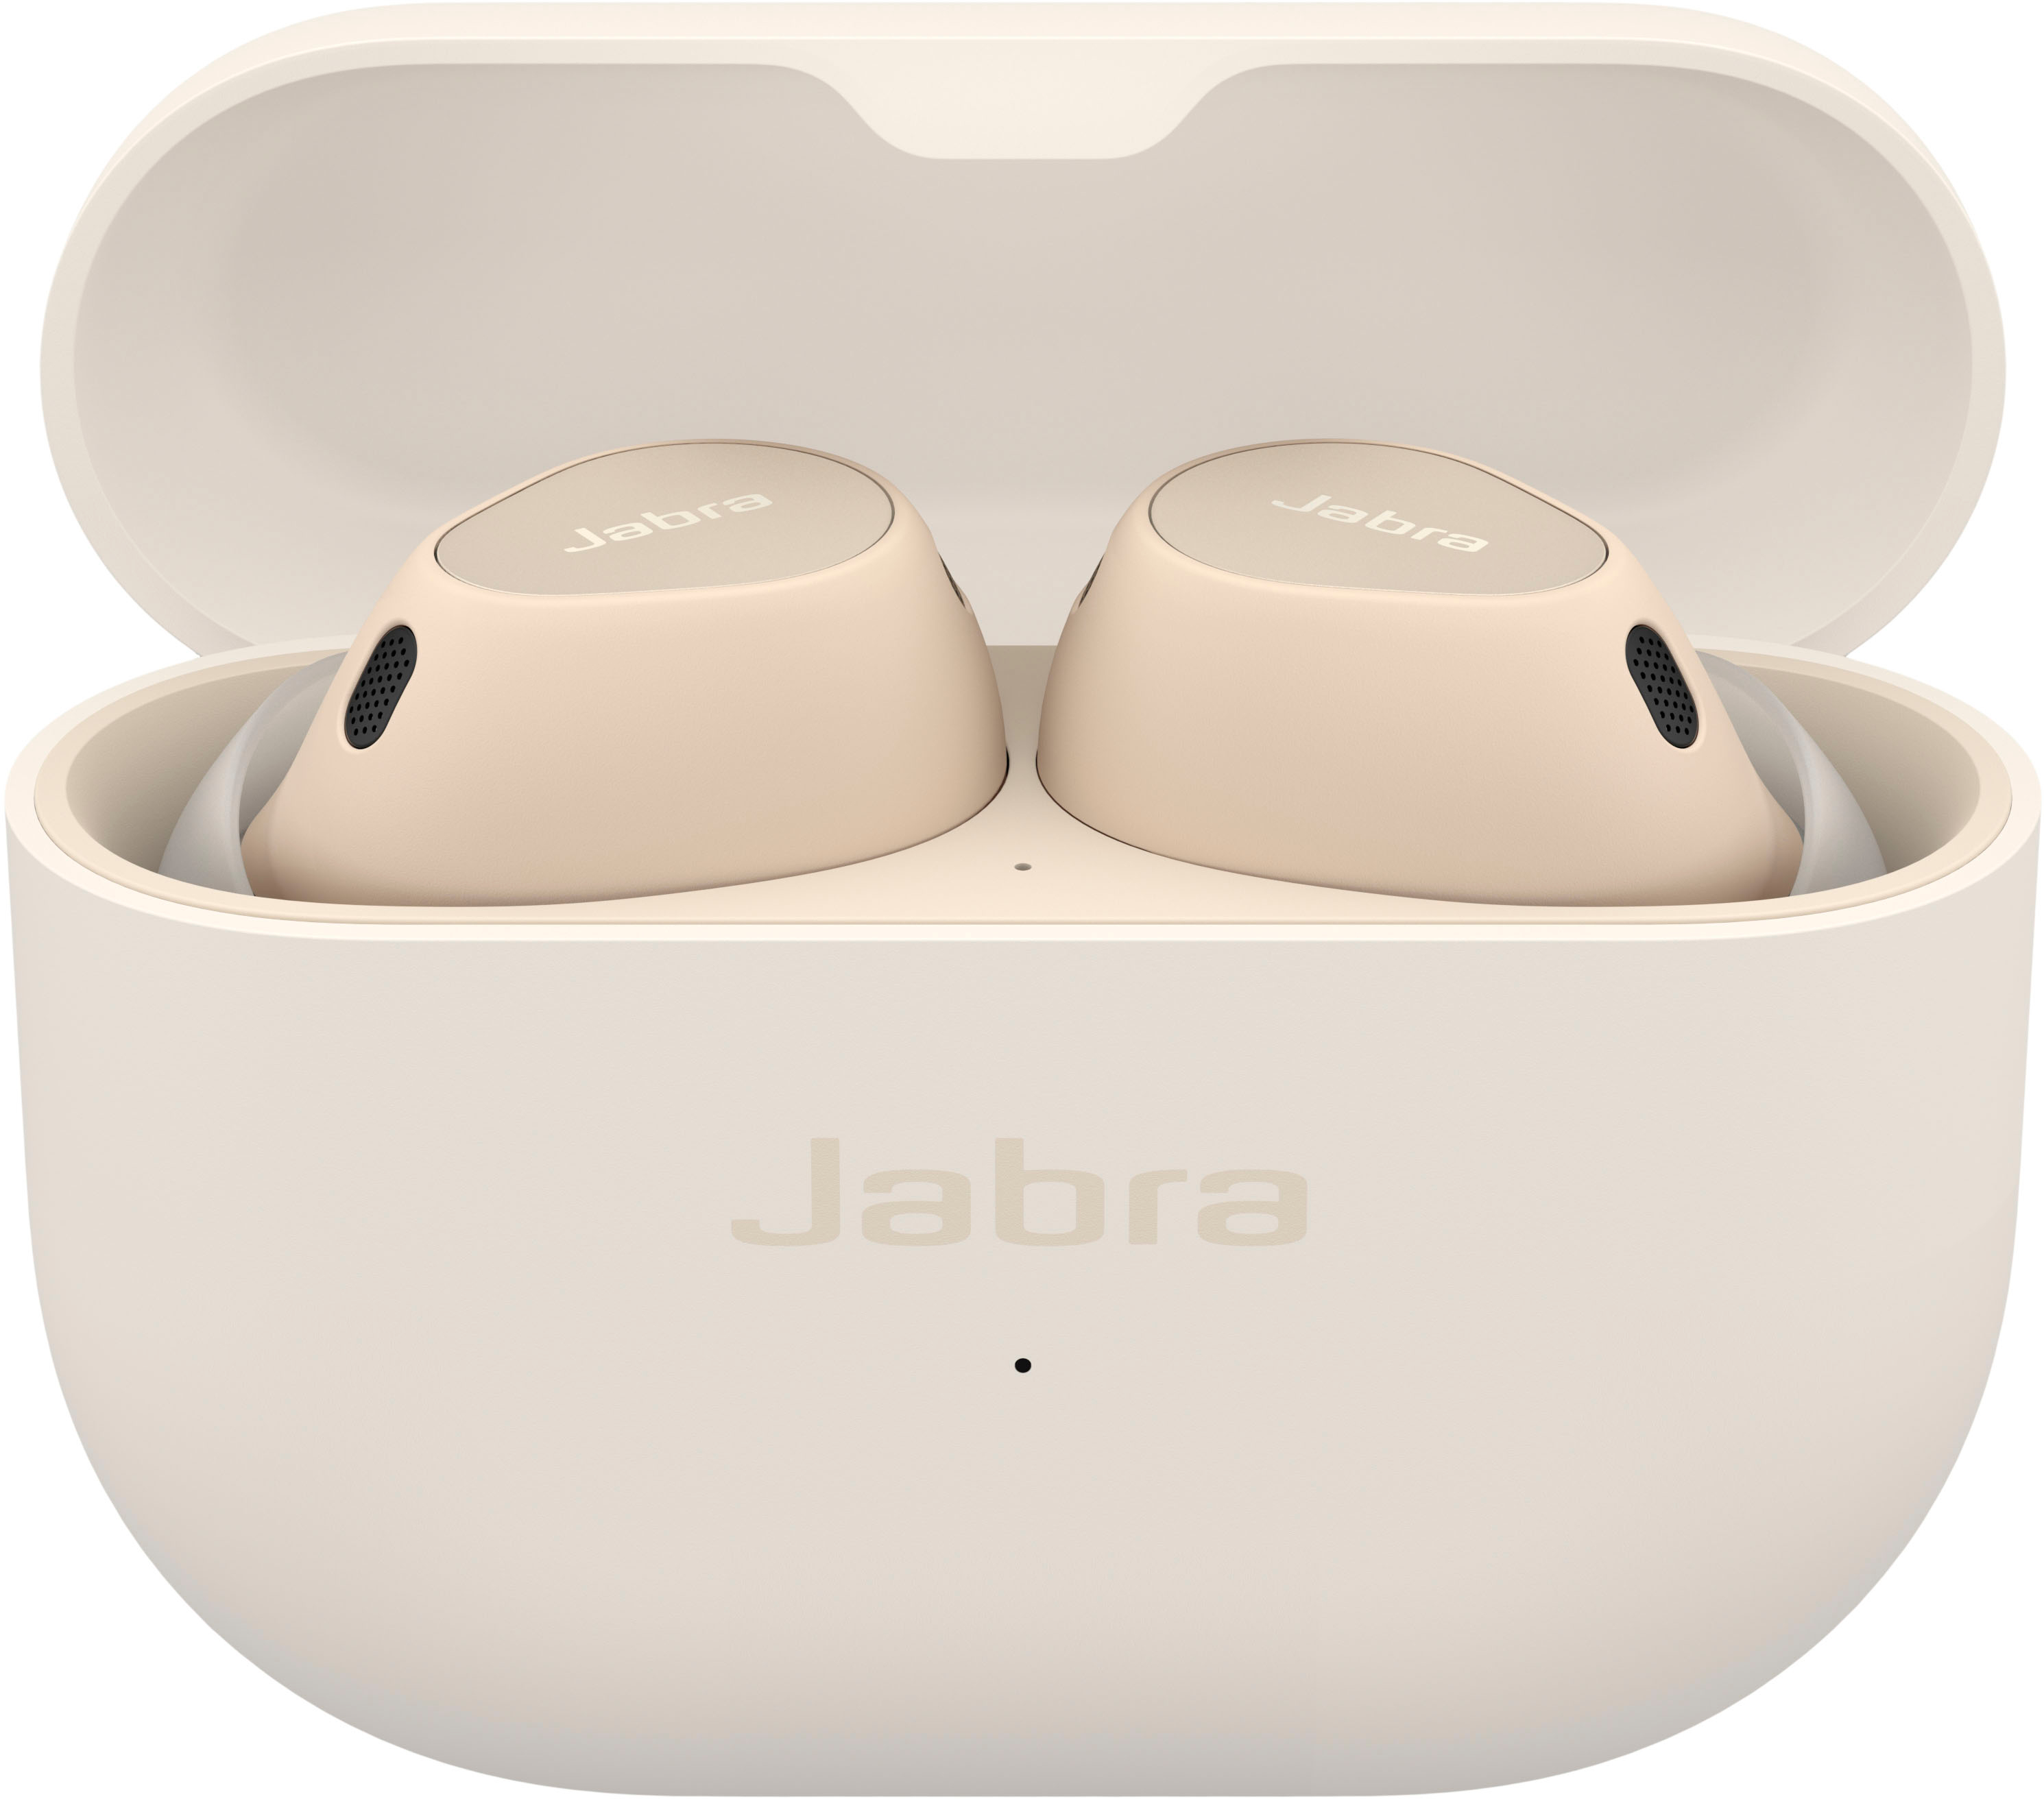 Sweeter-than-sweet discount on the incredible Jabra Elite 10 returns on   - PhoneArena